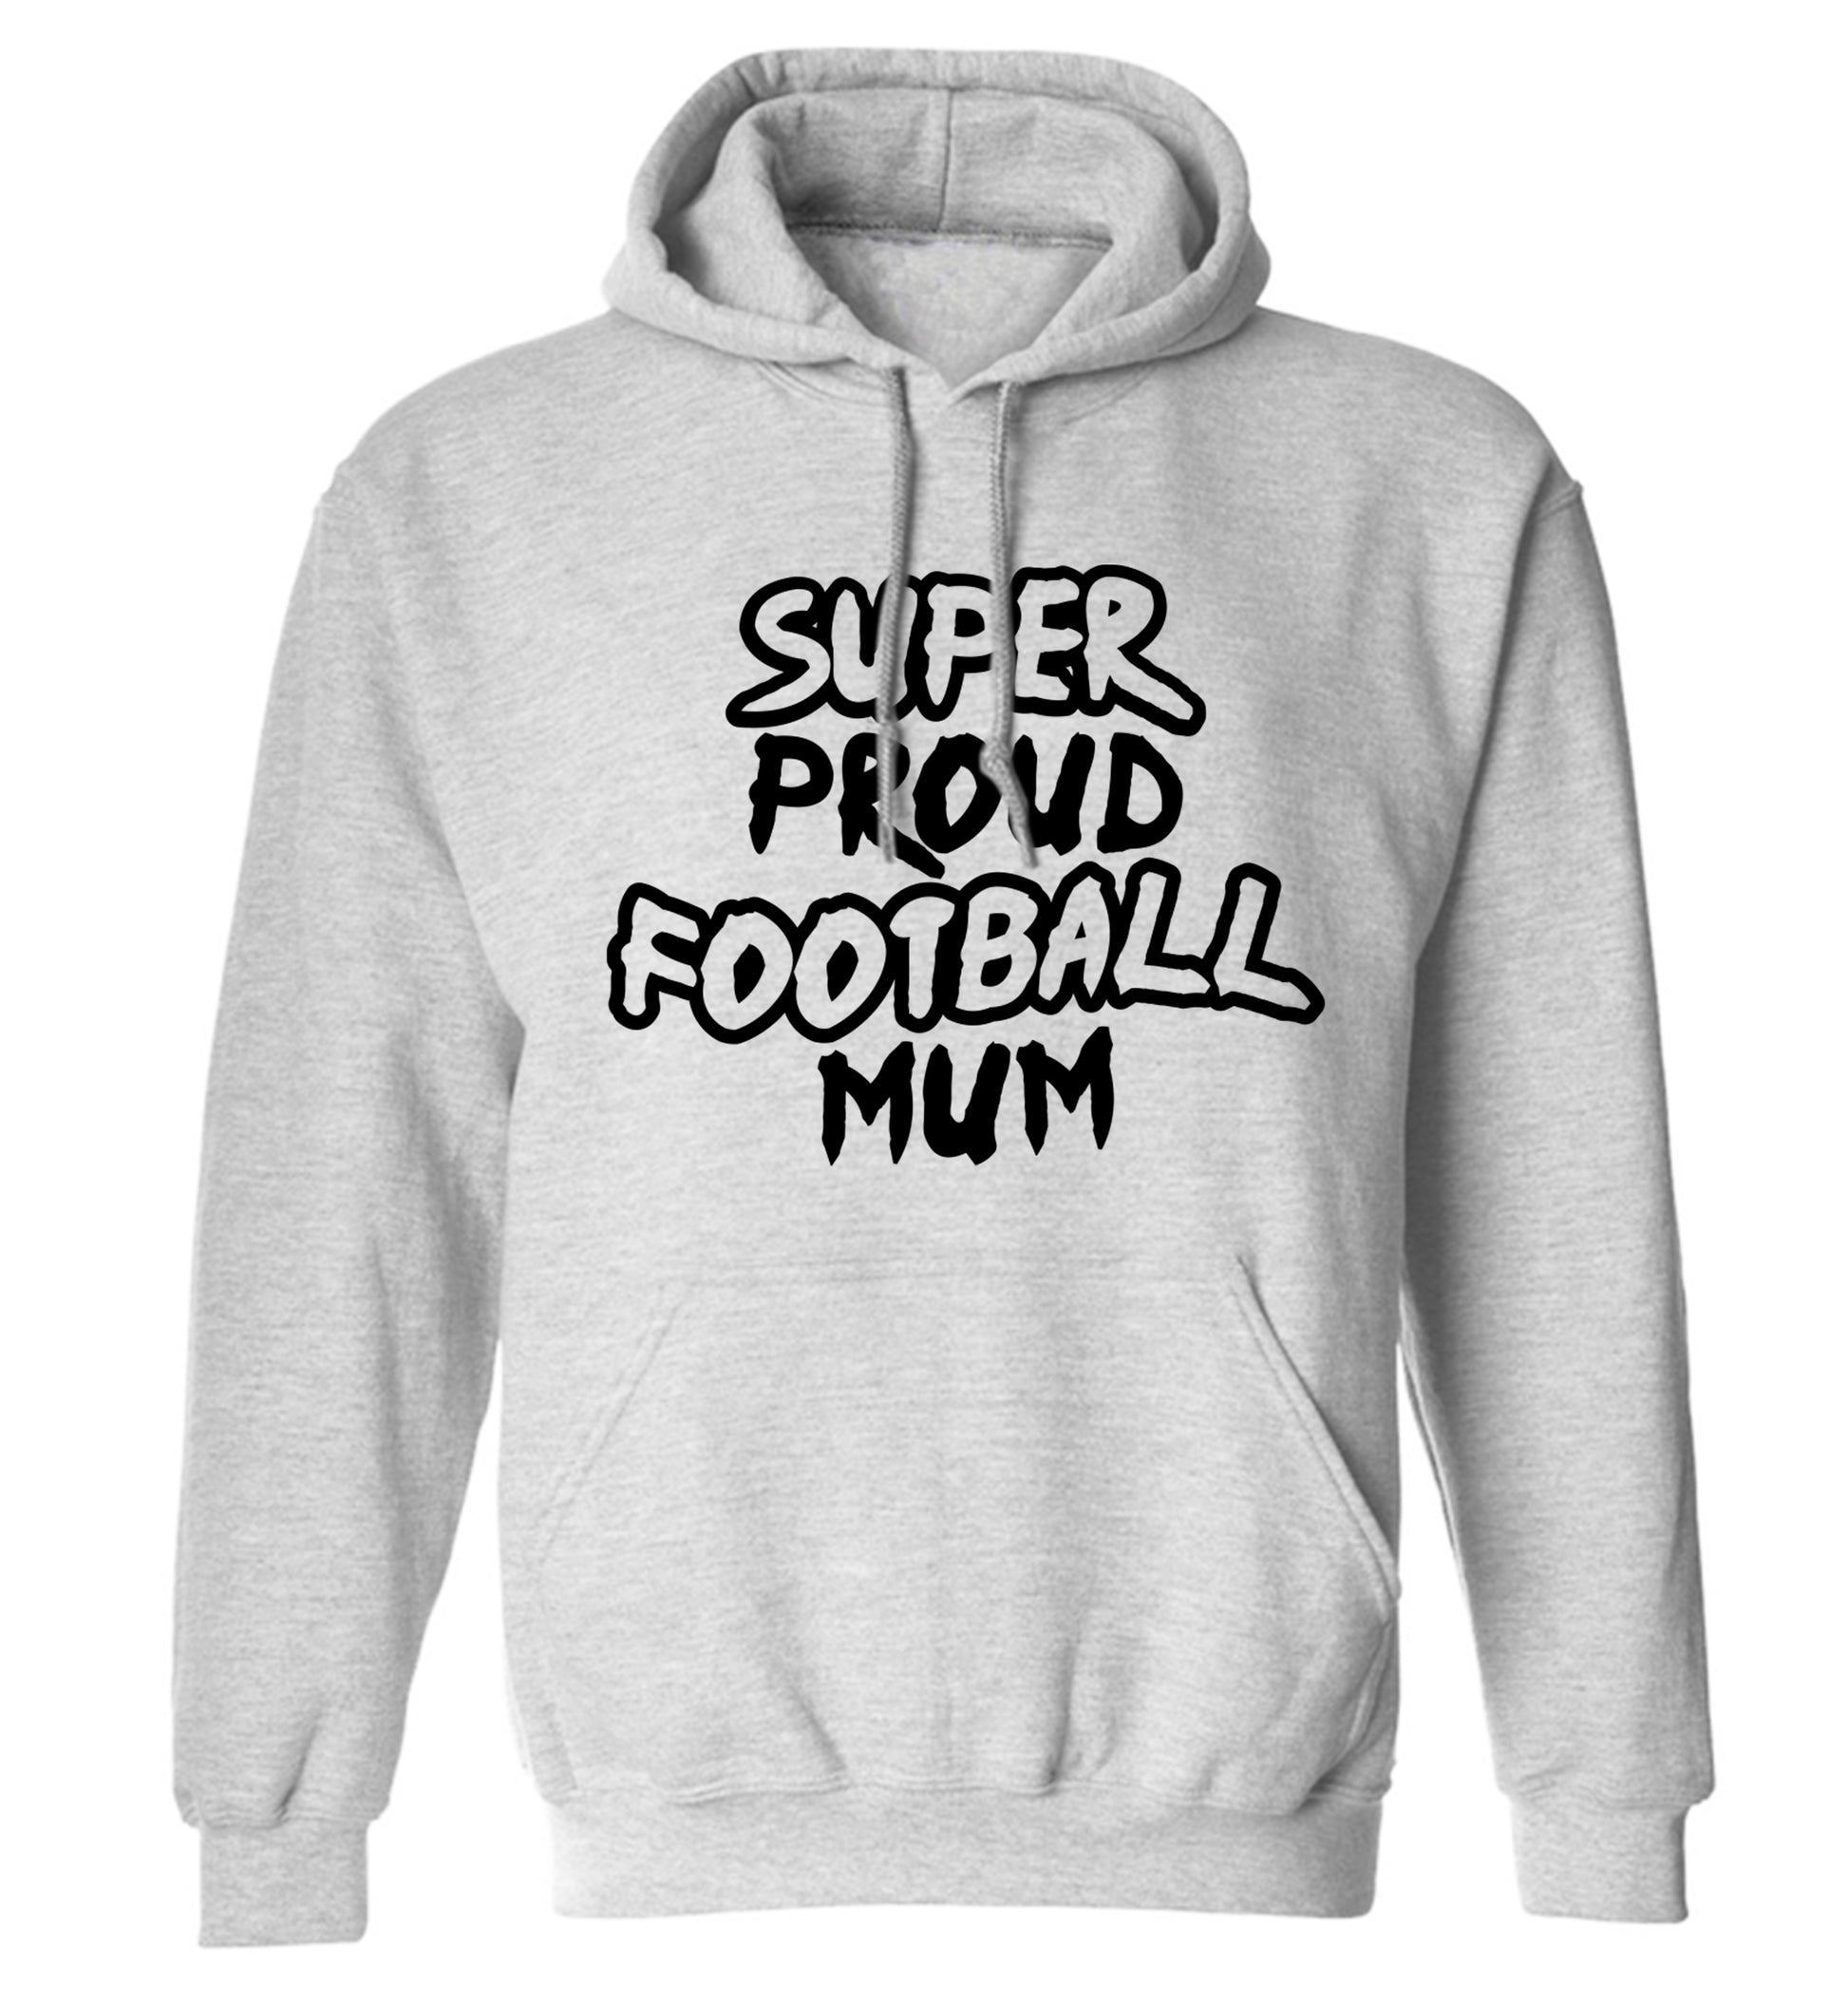 Super proud football mum adults unisexgrey hoodie 2XL